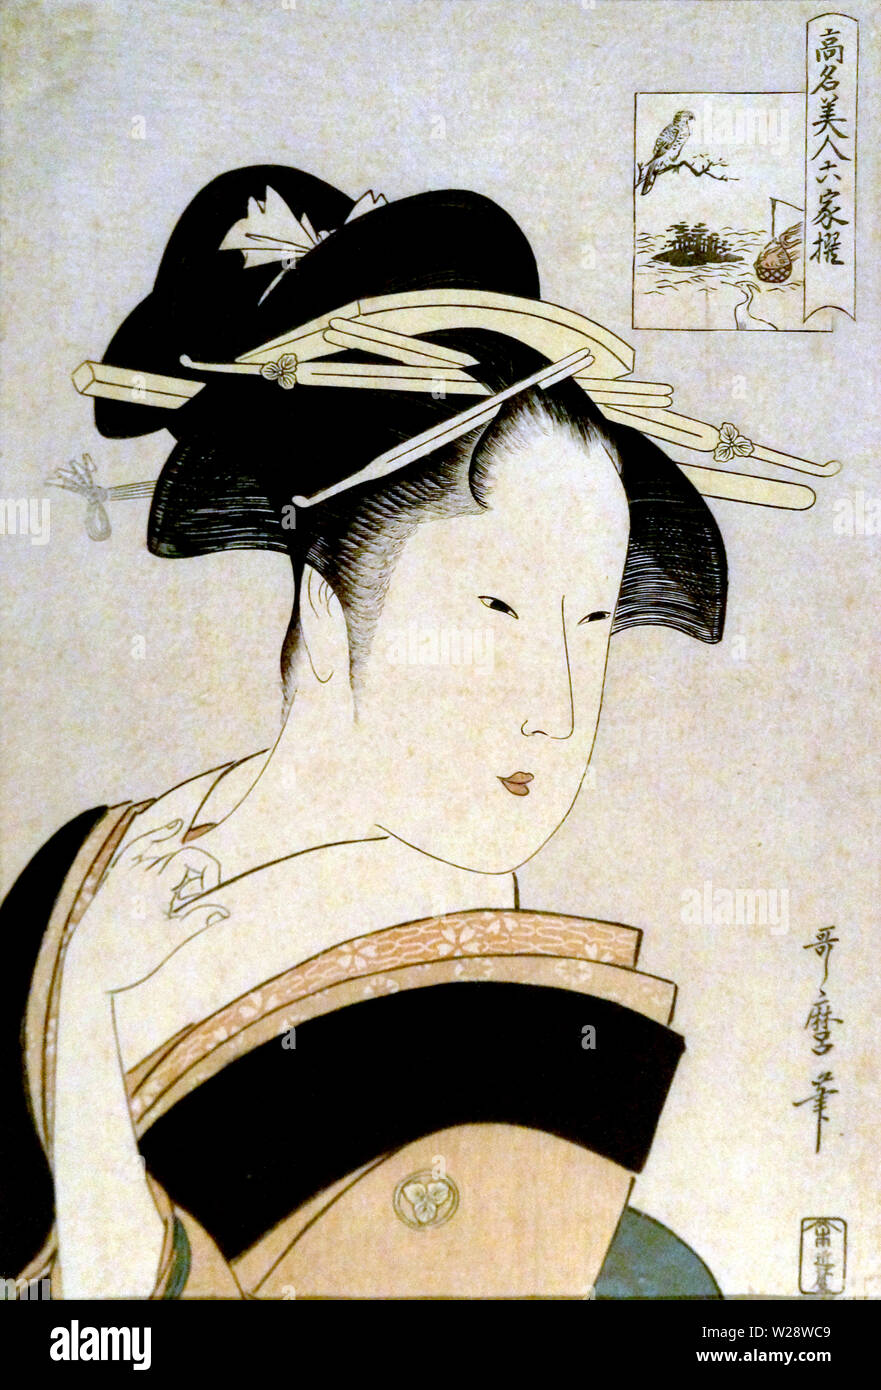 Rinomate bellezze paragonato a sei poeti immortale:Takashima Hisa, da Kitagawa Utamaro, woodblock stampa, Periodo Edo Foto Stock